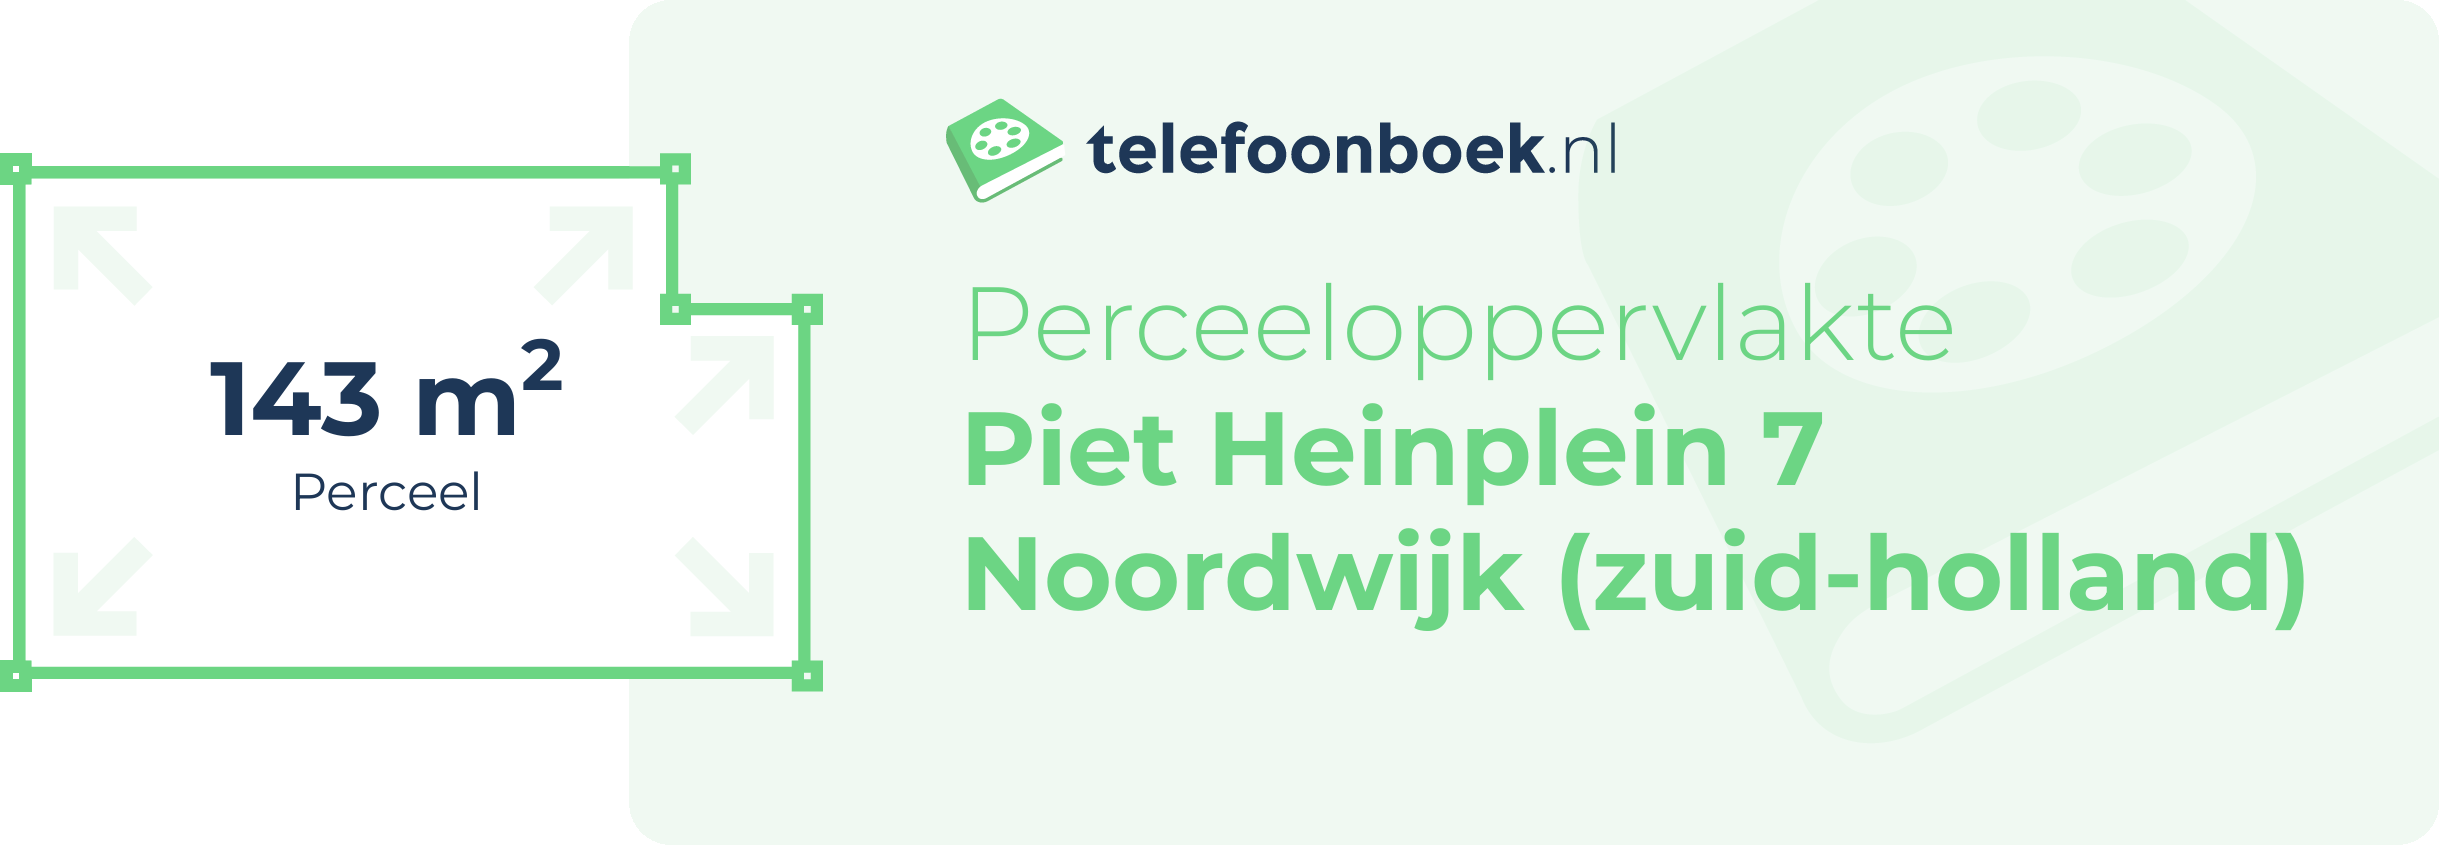 Perceeloppervlakte Piet Heinplein 7 Noordwijk (Zuid-Holland)